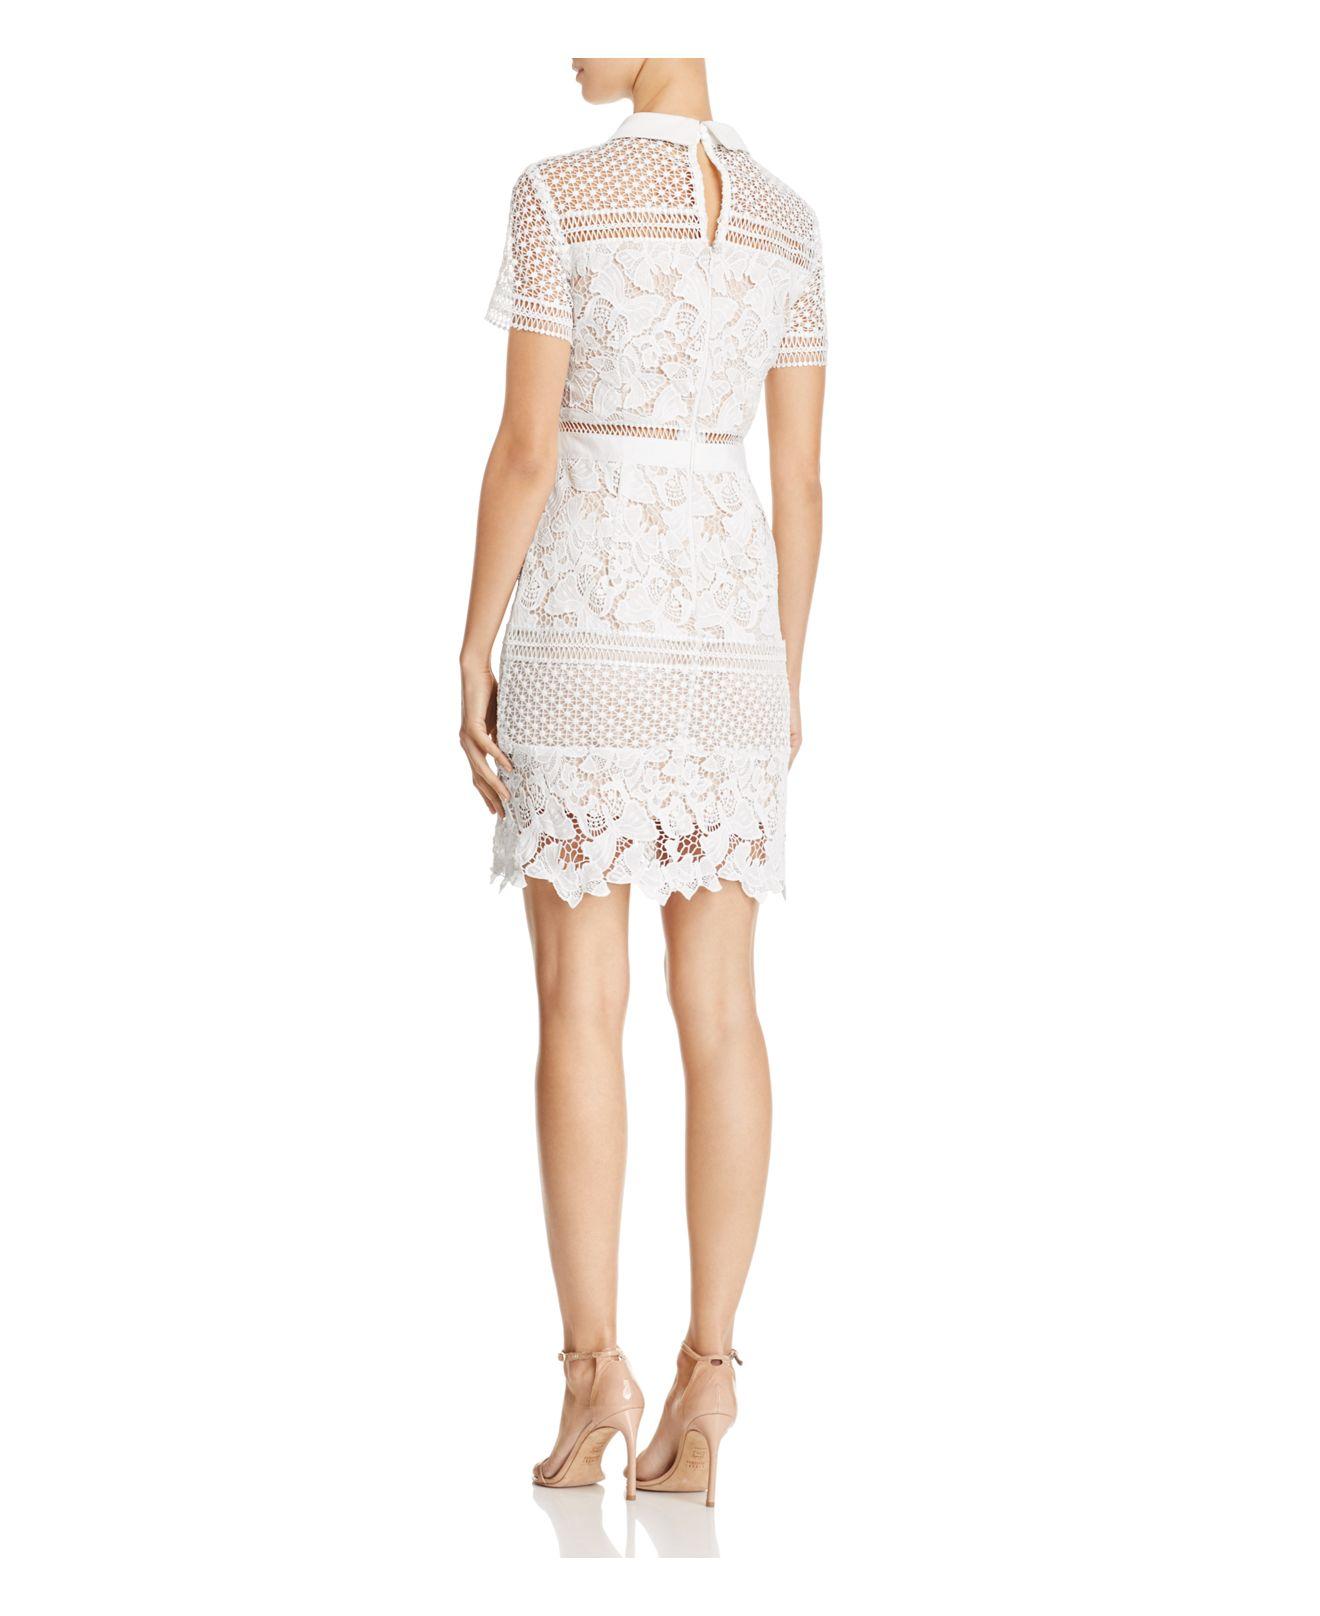 aqua white lace dress